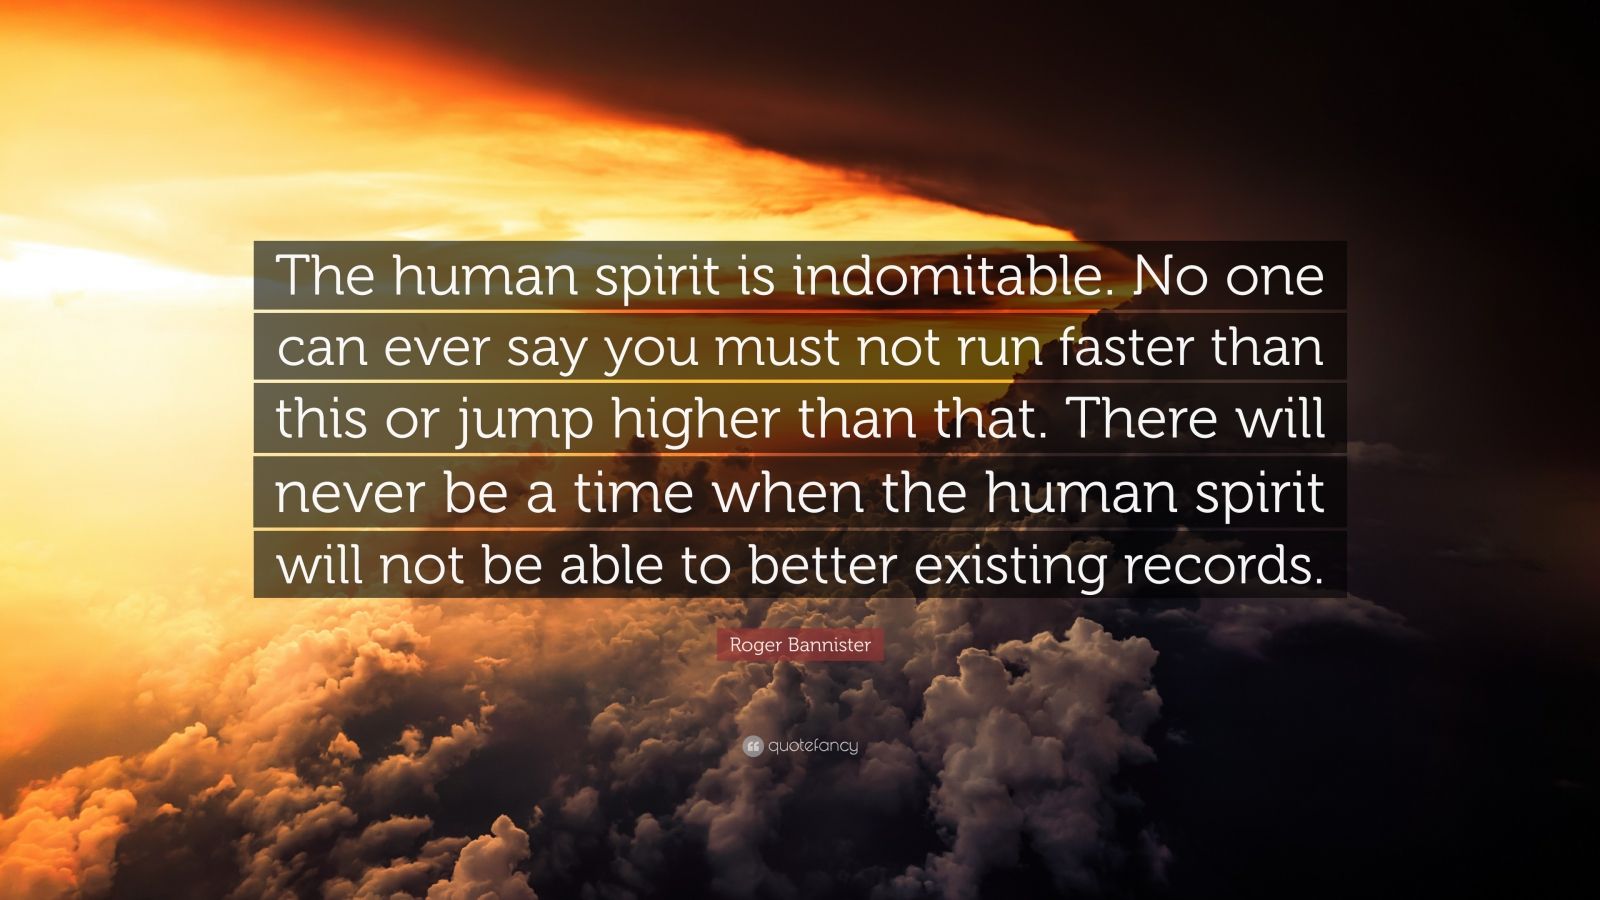 The Human Spirit Is Indomitable